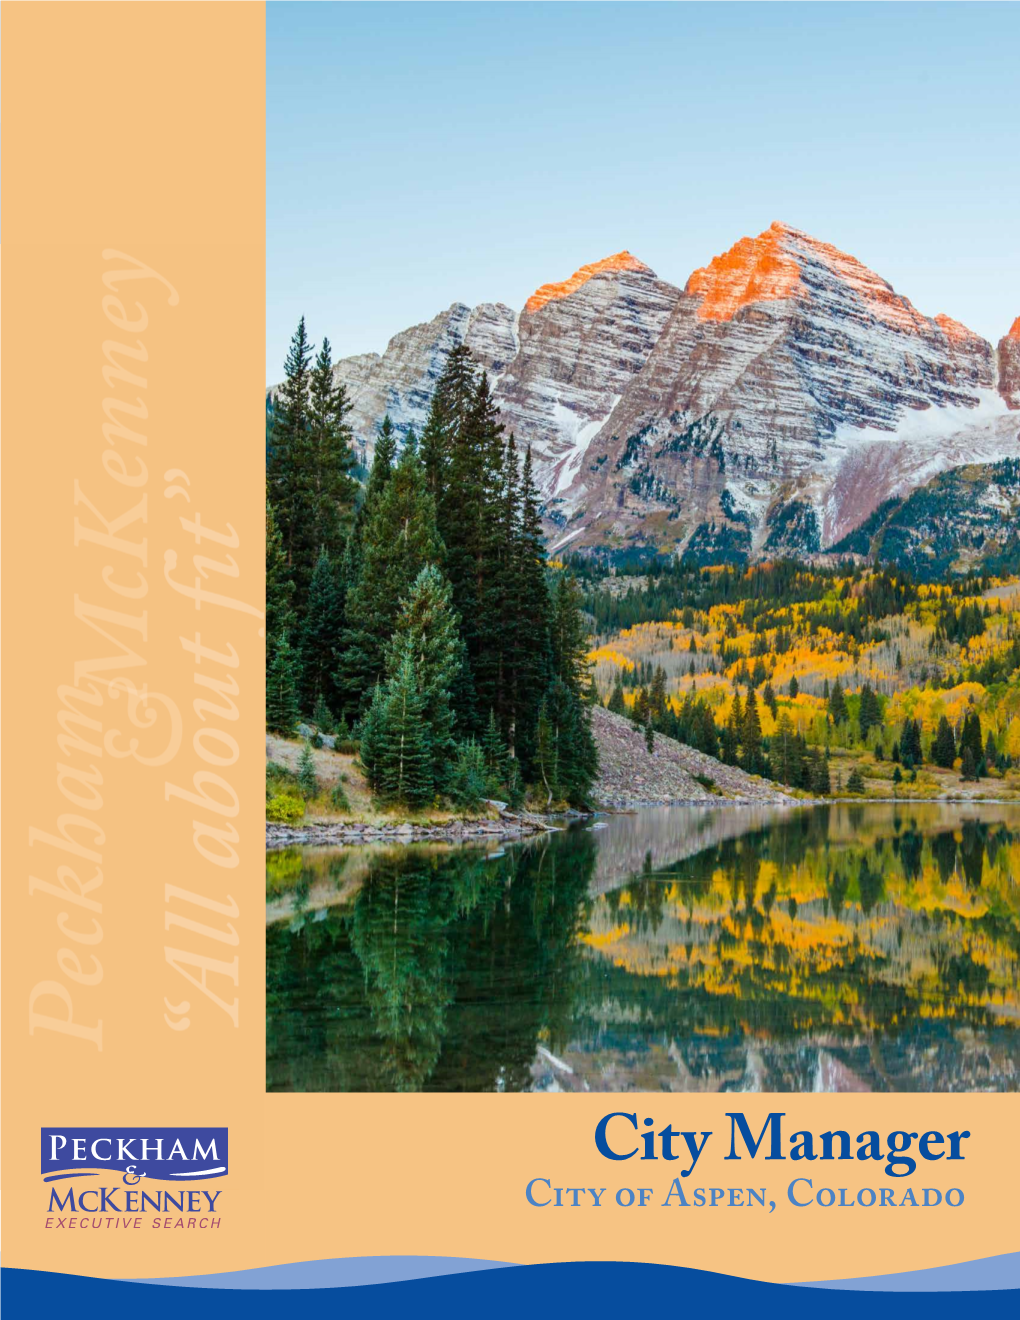 City Manager City of Aspen, Colorado the Community Around 48% to 52%